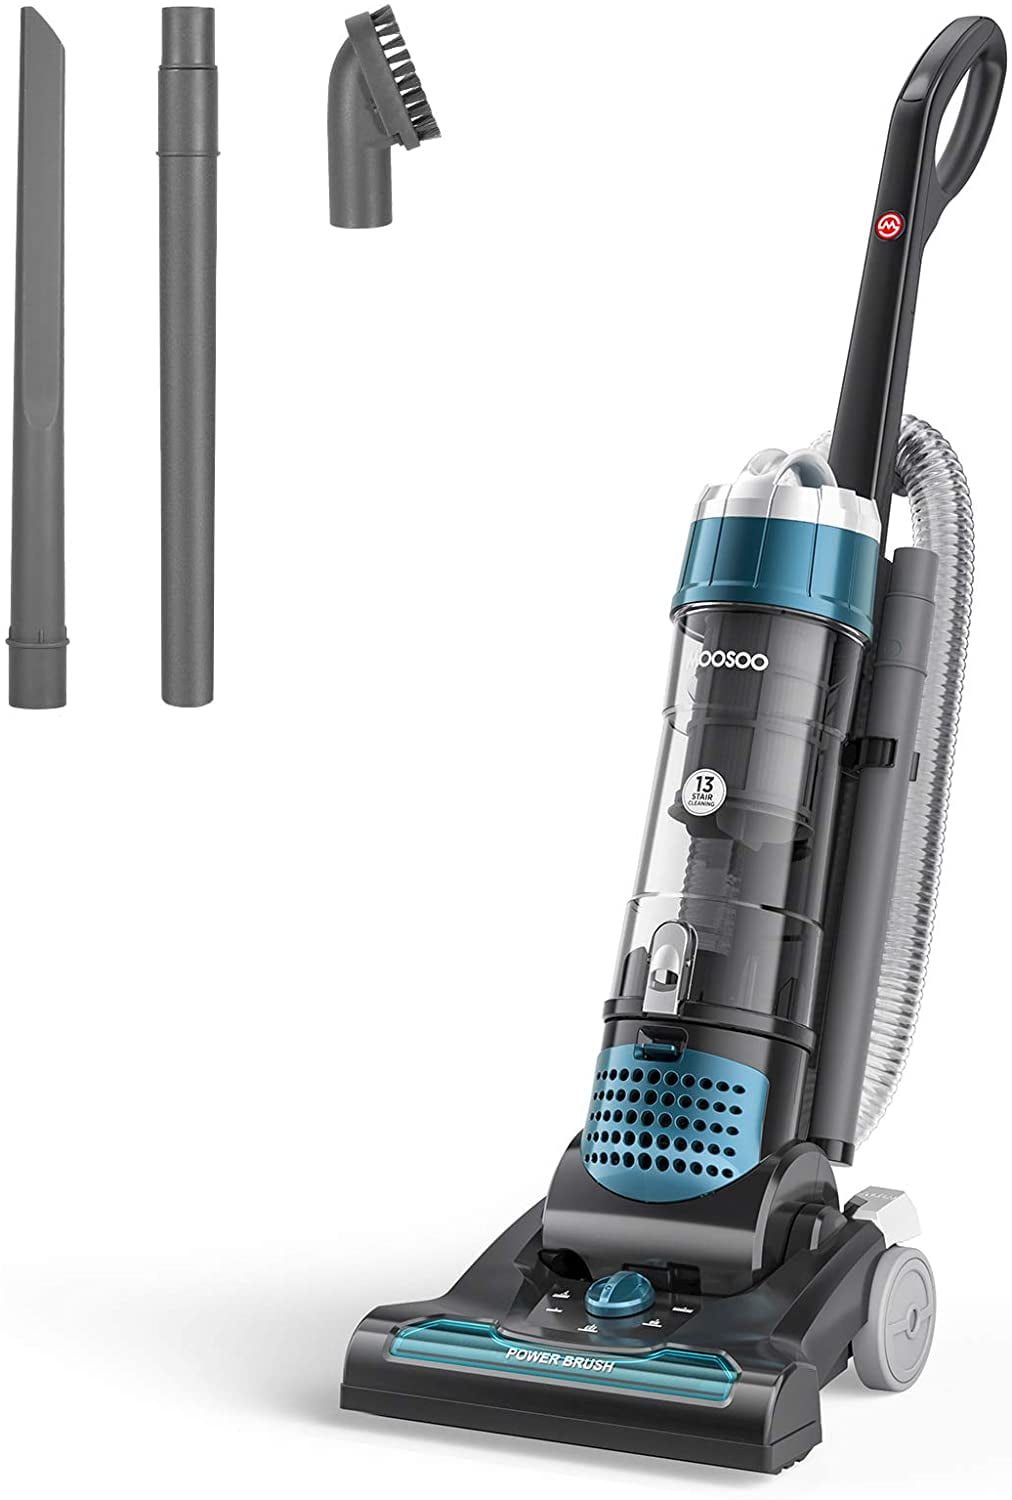 Moosoo Upright Vacuums 1400w Stick, Best Upright Vacuum For Pet Hair And Hardwood Floors